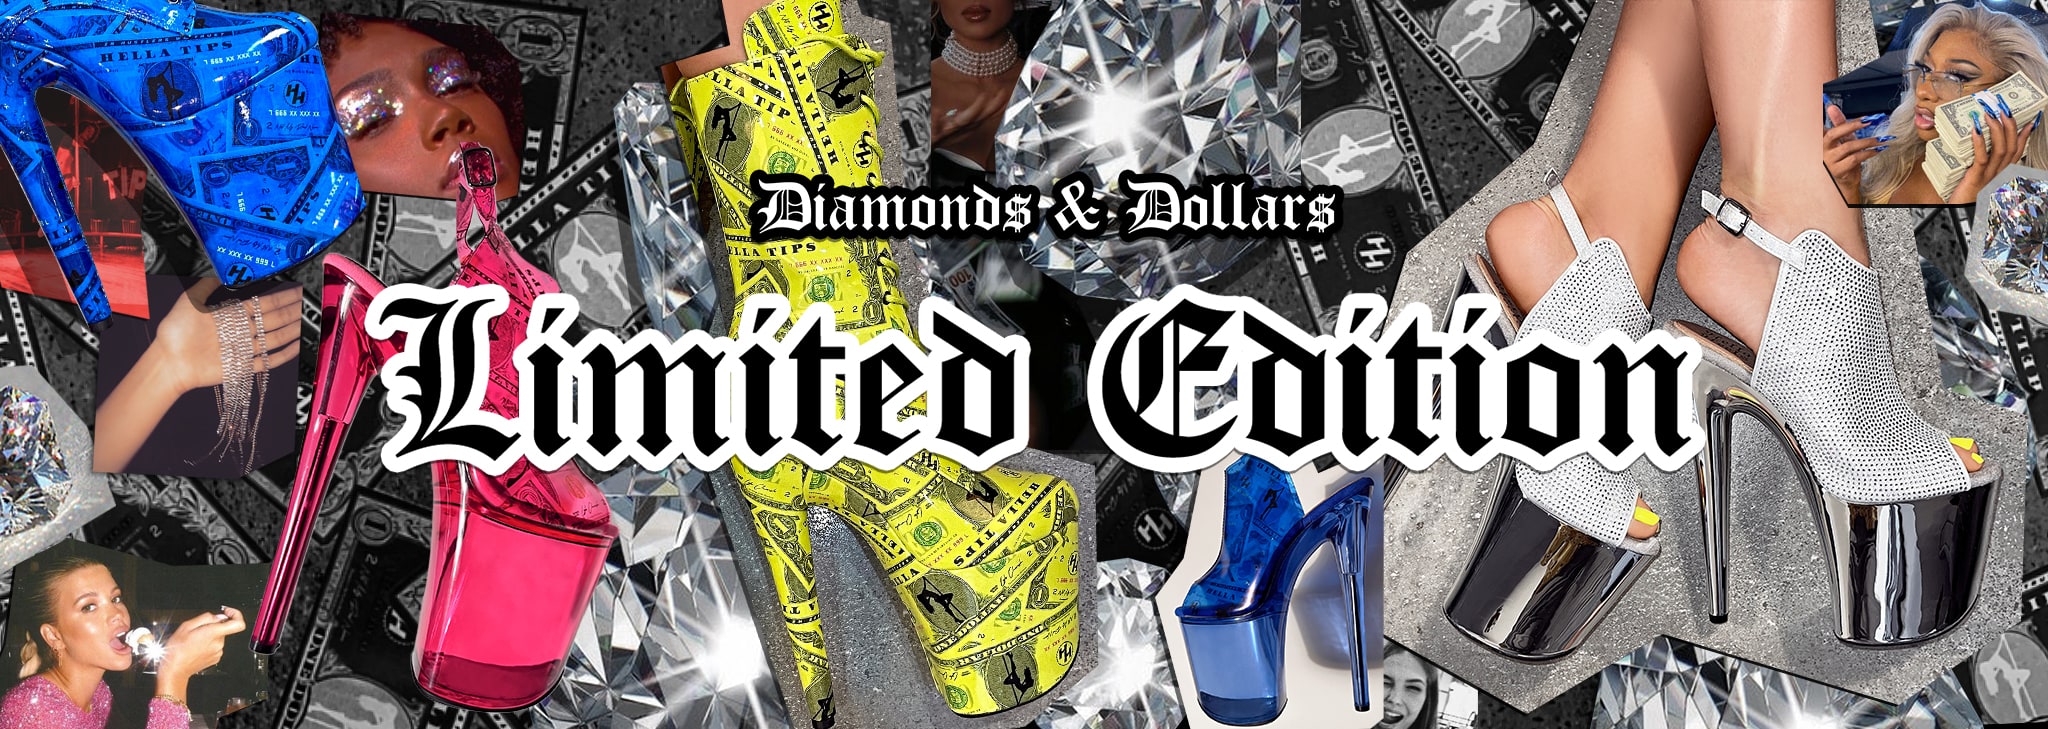 Diamonds & Dollars